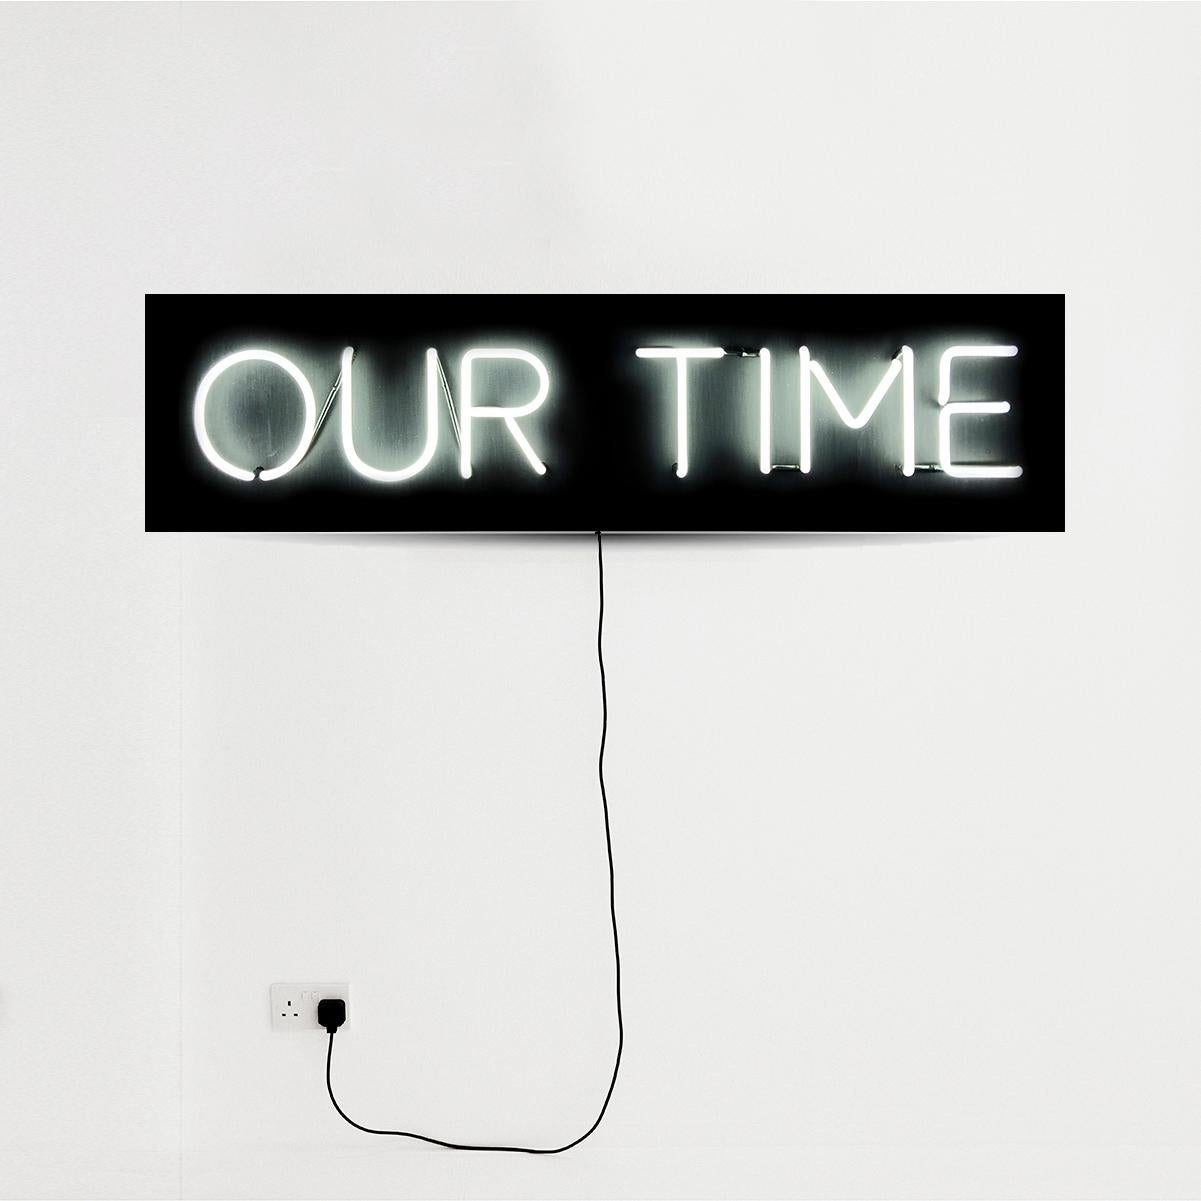 Our Time - Neon Wall Sculpture, Text, Contemporary, Art, Kim Anna Smith 2